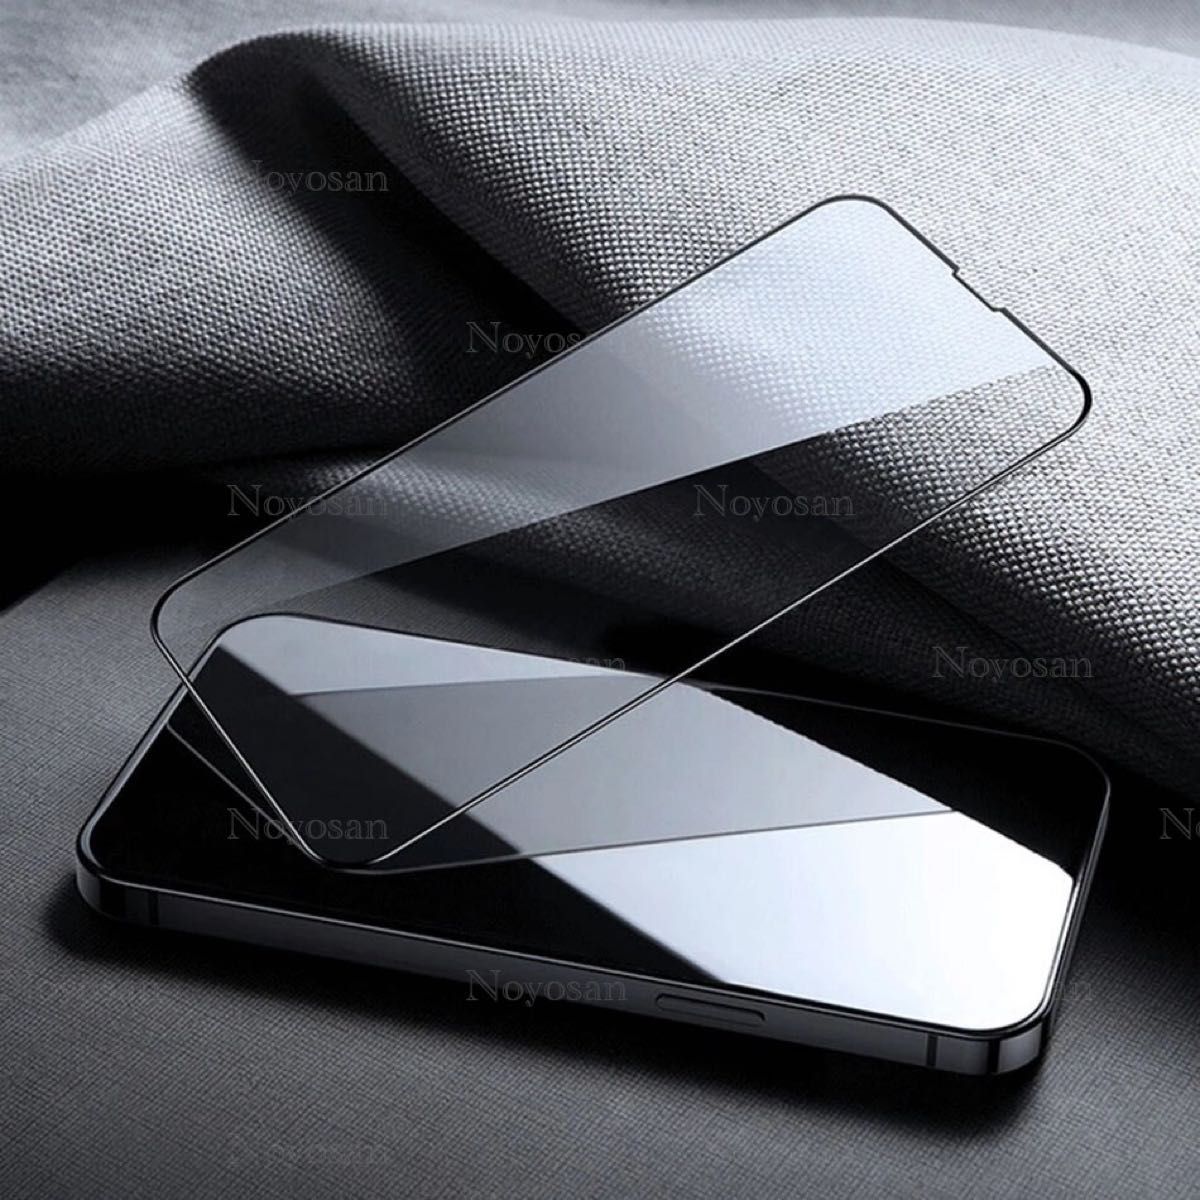 iPhone15Plus対応 ブルーライトカット全面保護強化ガラスフィルム&背面カメラレンズ用透明強化ガラスフィルムセット